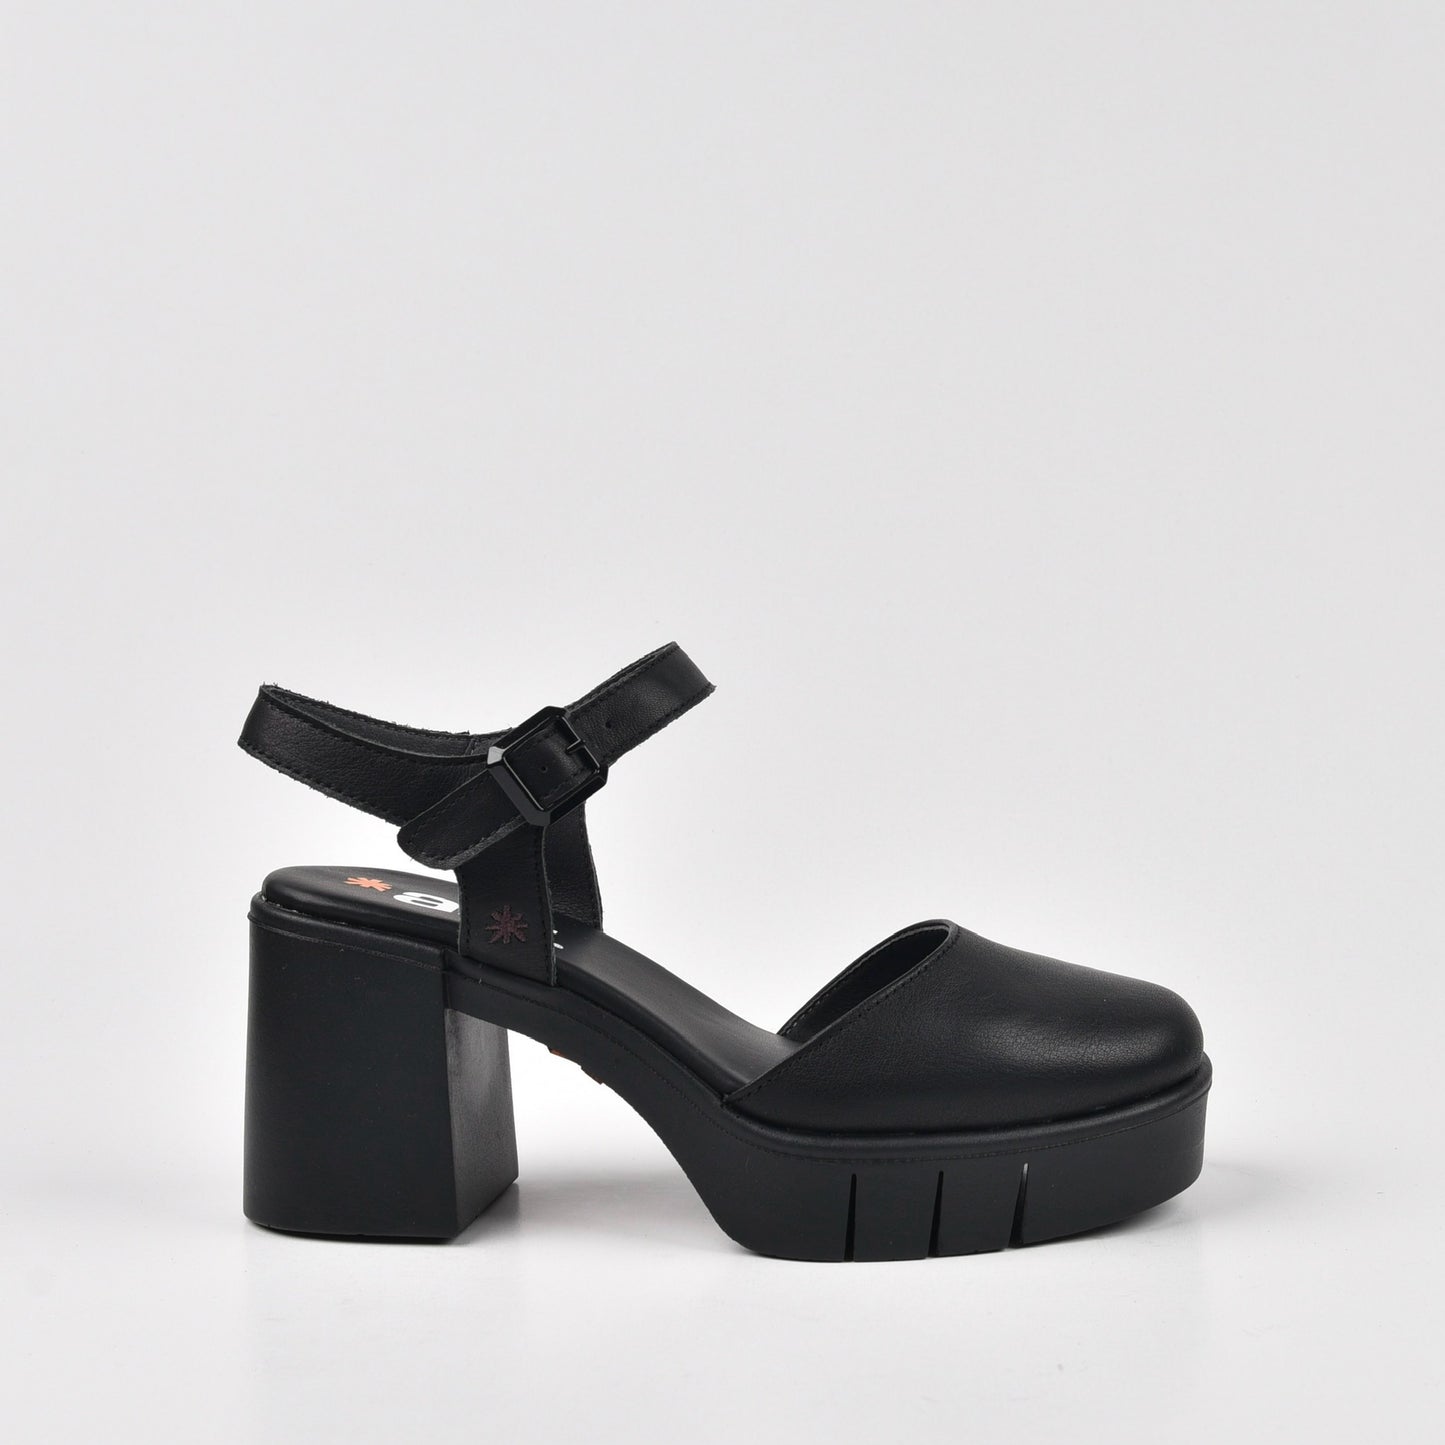 Art Spanish Medium-Heel Sandal for Women in Nappa Black.